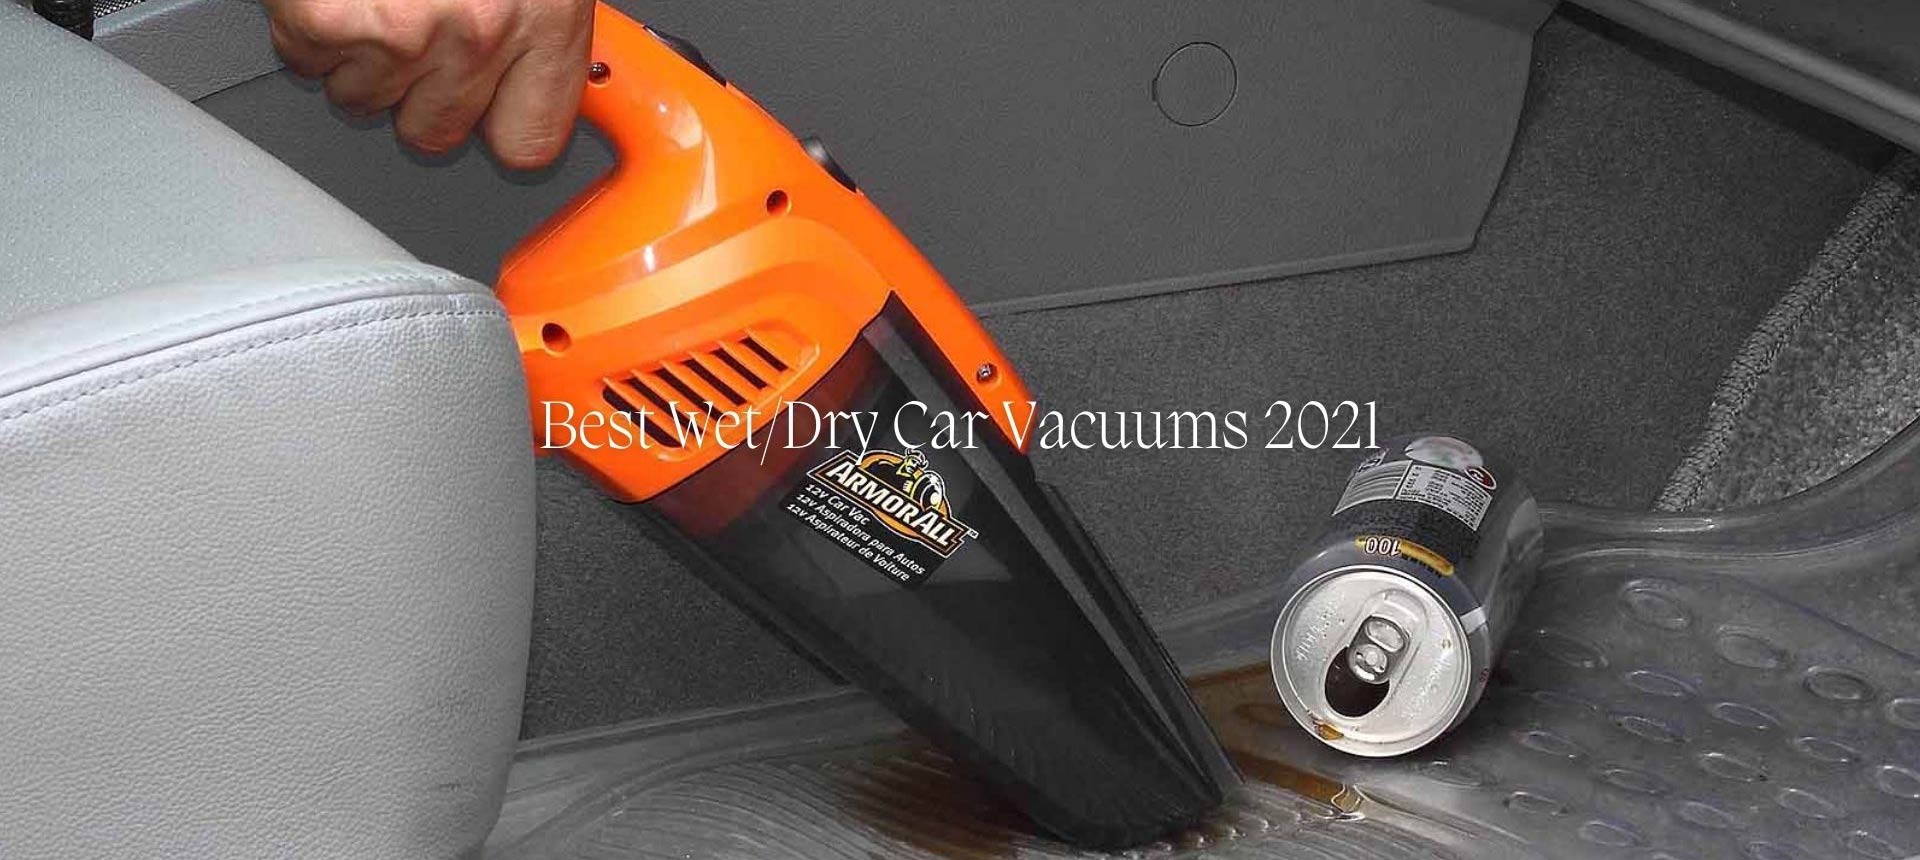 Best Wet/Dry Car Vacuums 2021